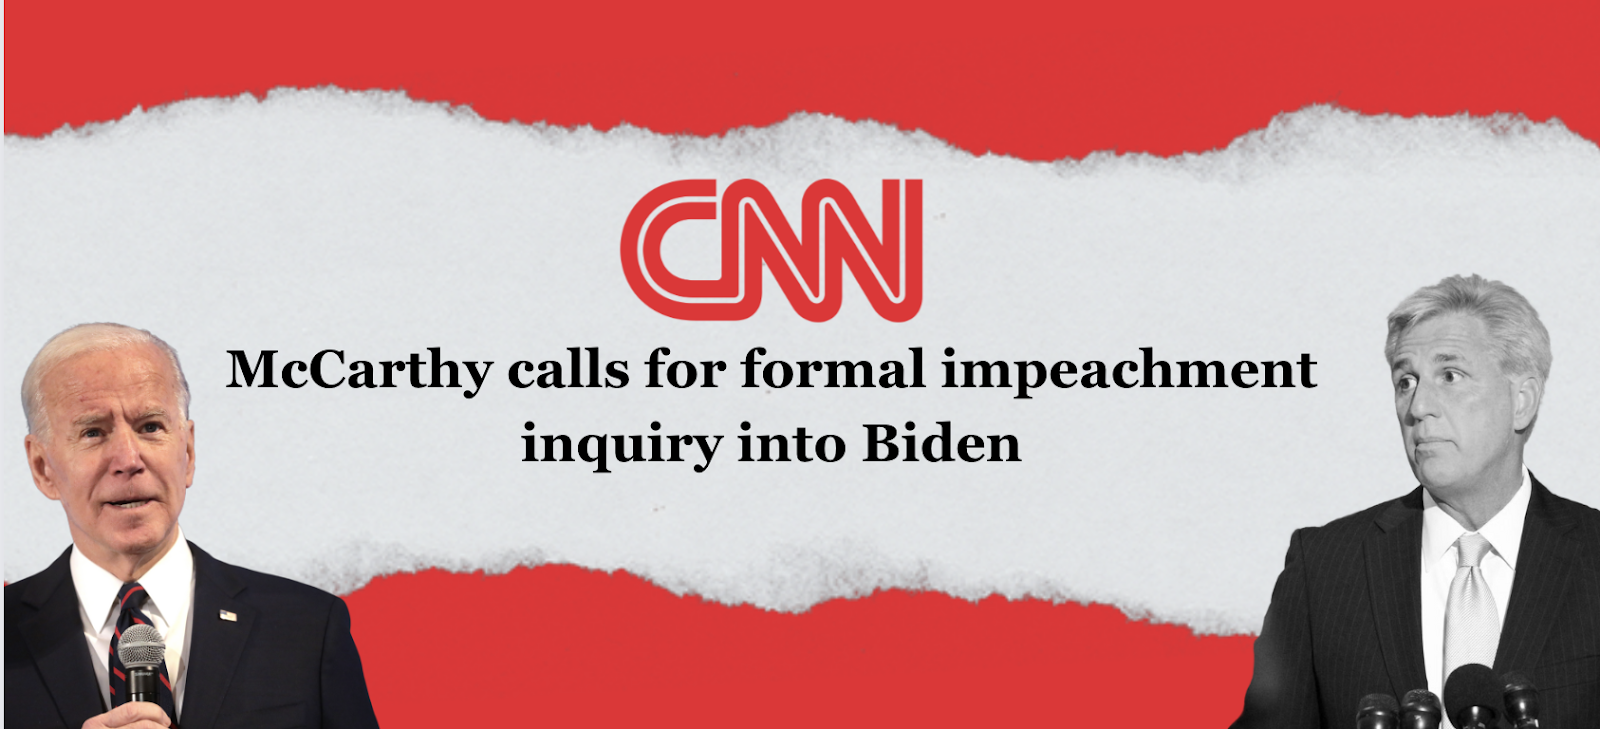 CNN: McCarthy calls for formal impeachment inquiry into Biden 